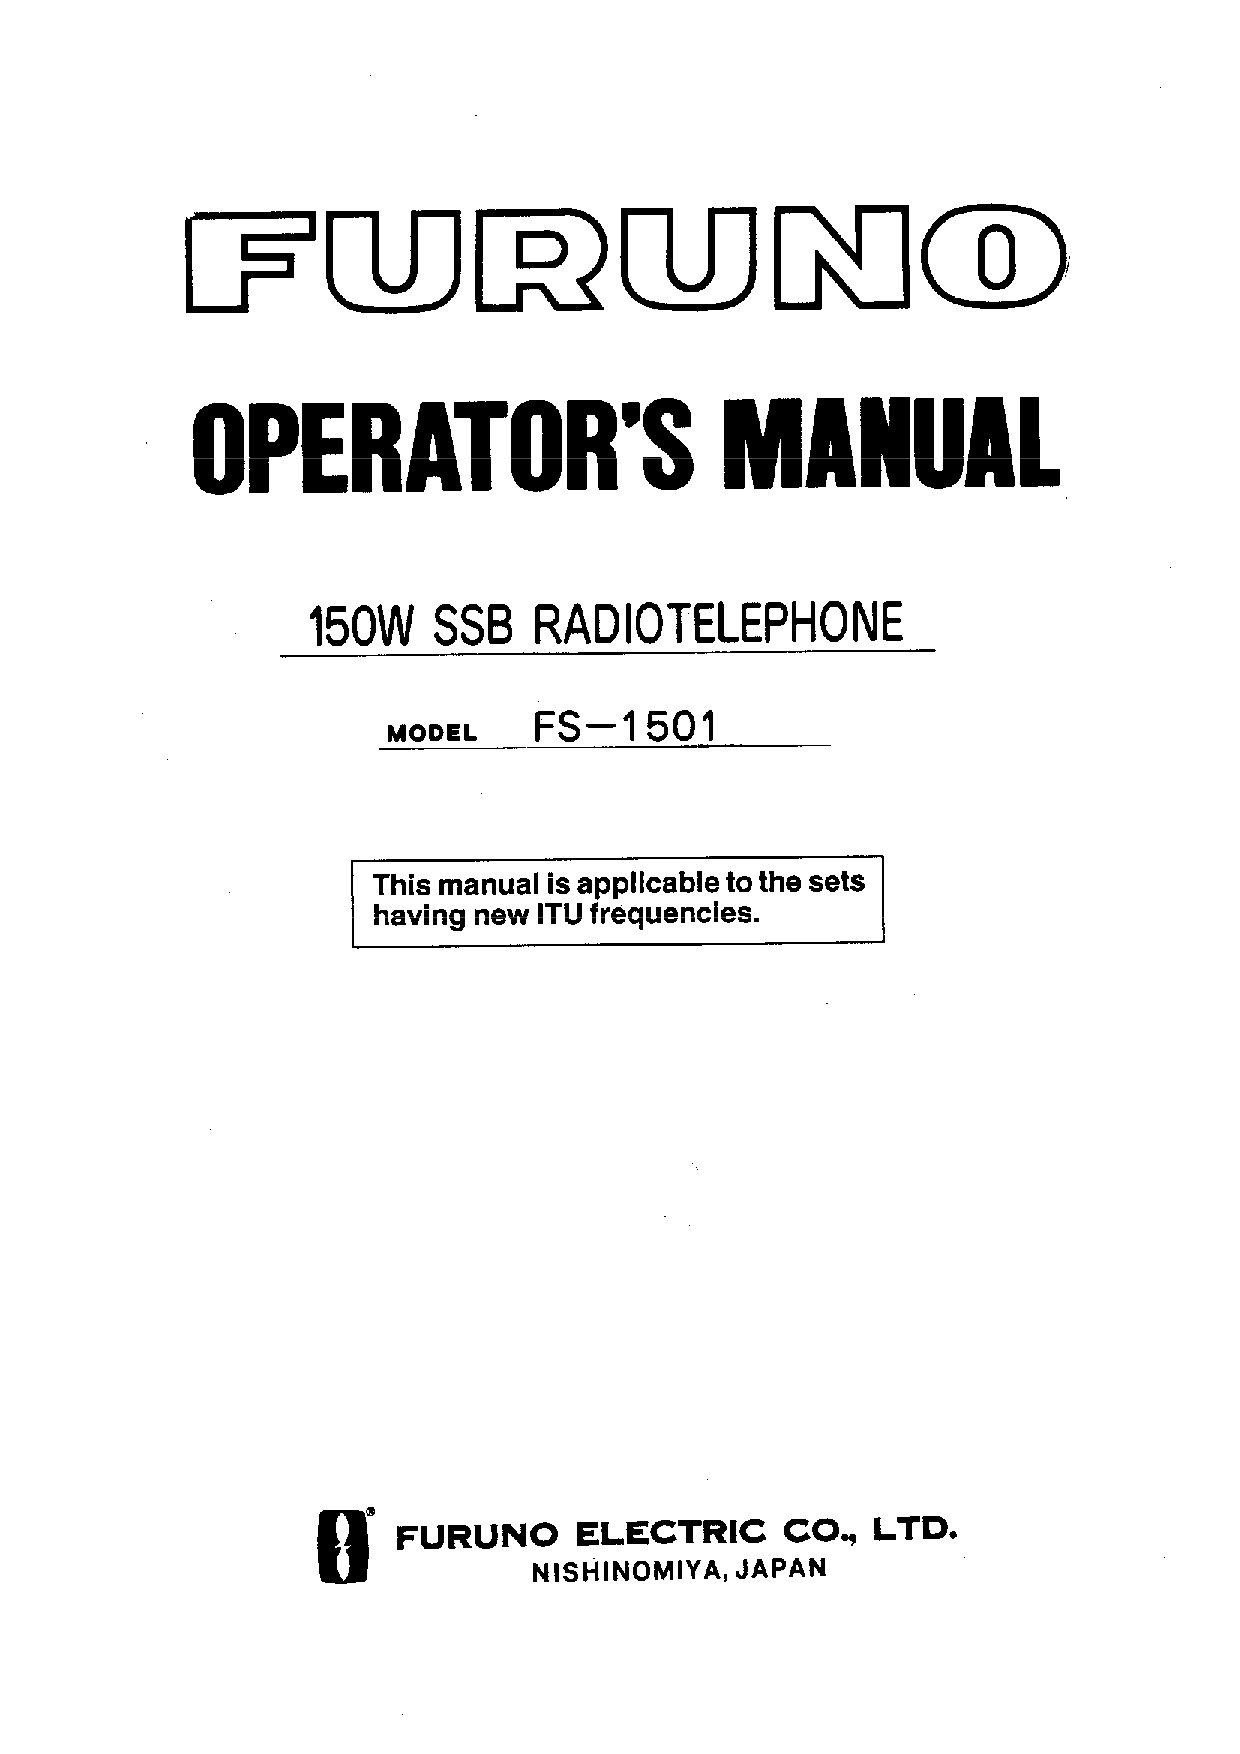 Furuno FS-1501 User Manual